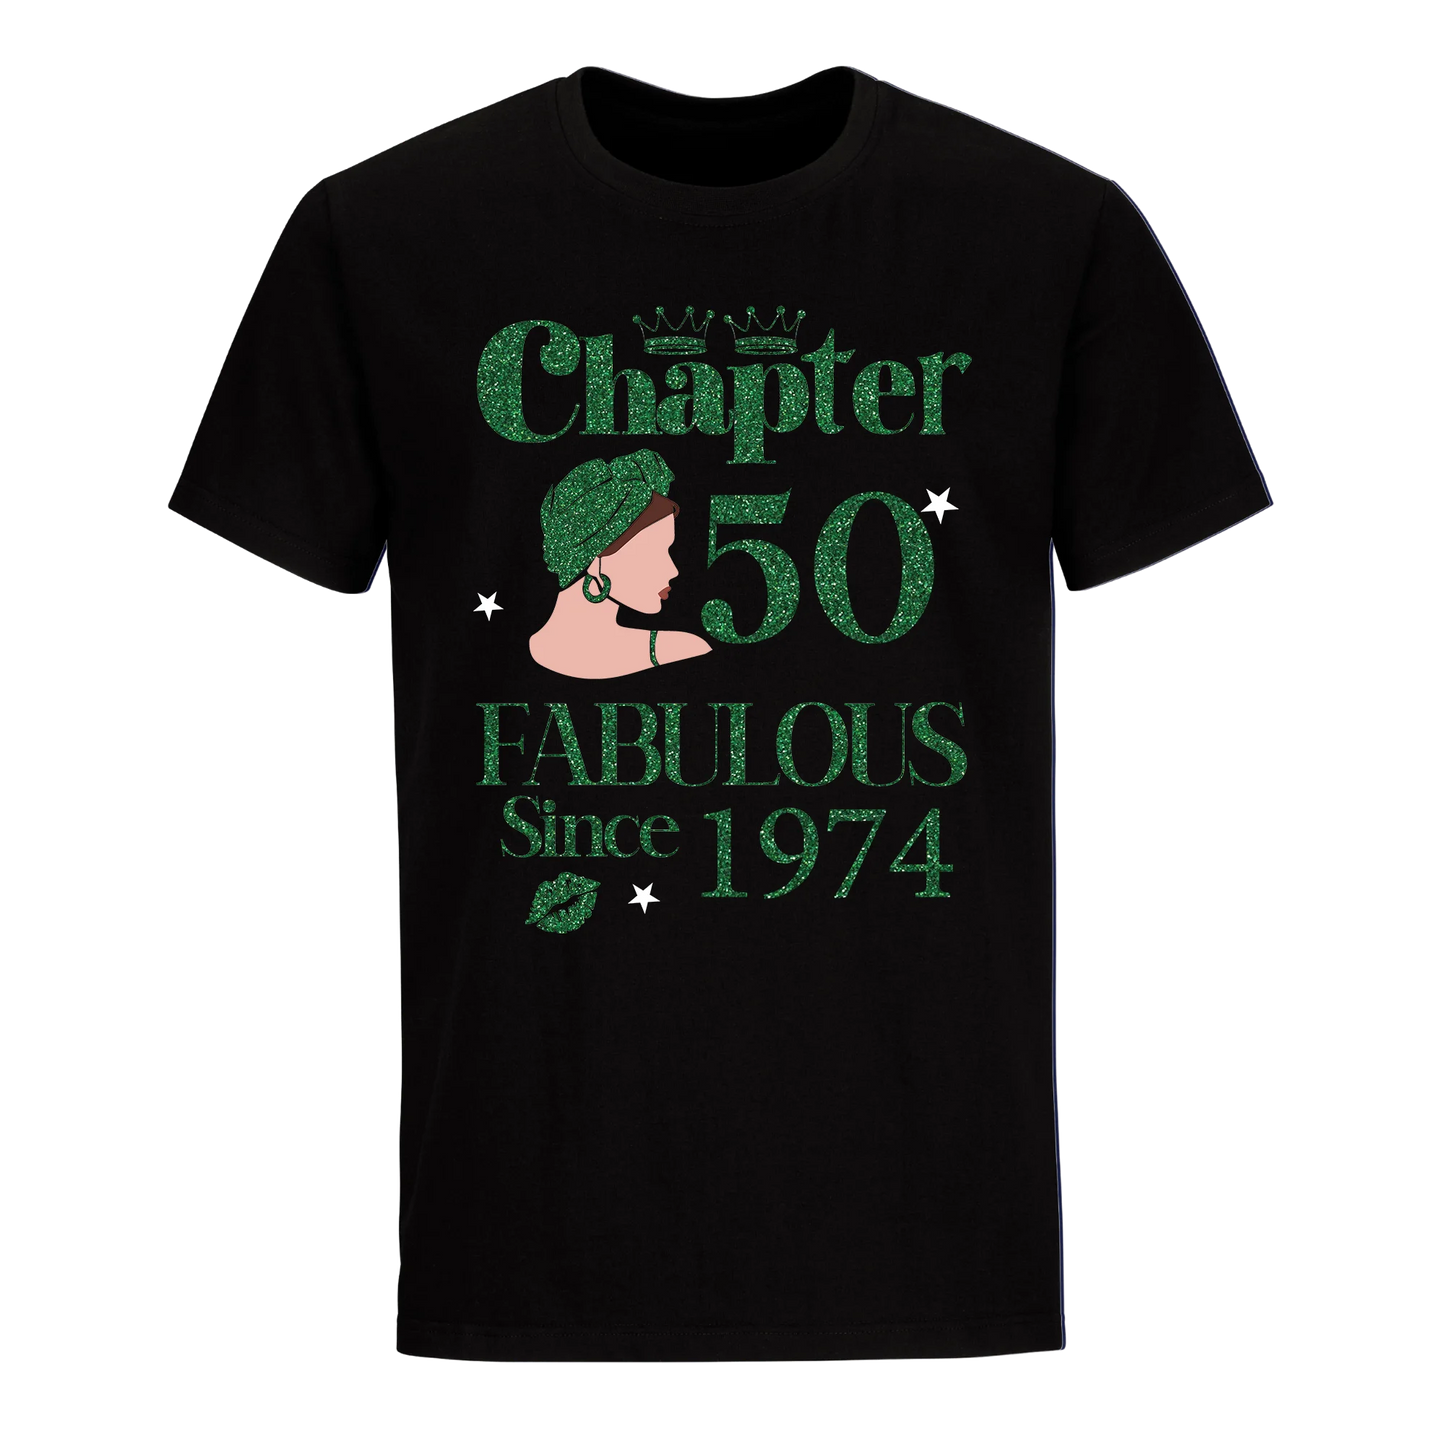 CHAPTER 50TH FABULOUS SINCE 1974 GREEN UNISEX SHIRT